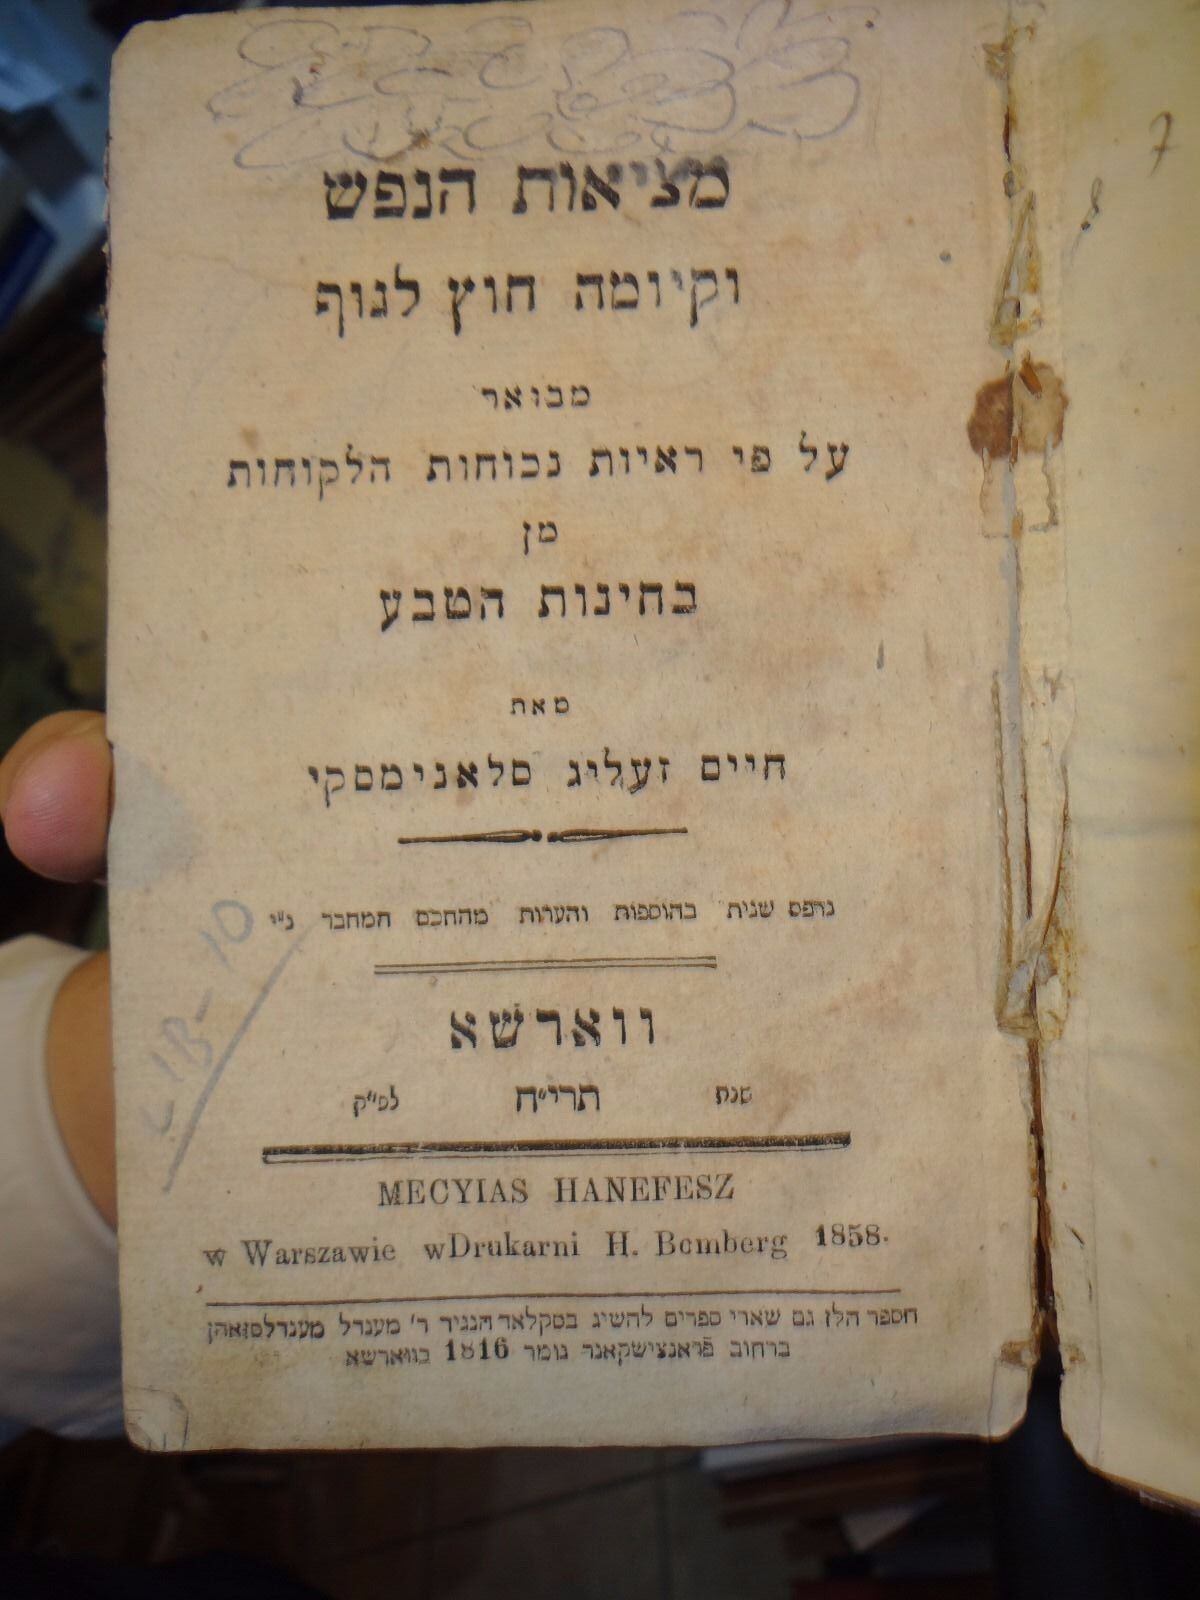 ANTIQUE HEBREW BOOK ספר עתיק מציאות הנפש =נדיר מצב מצויין  נייר משובח